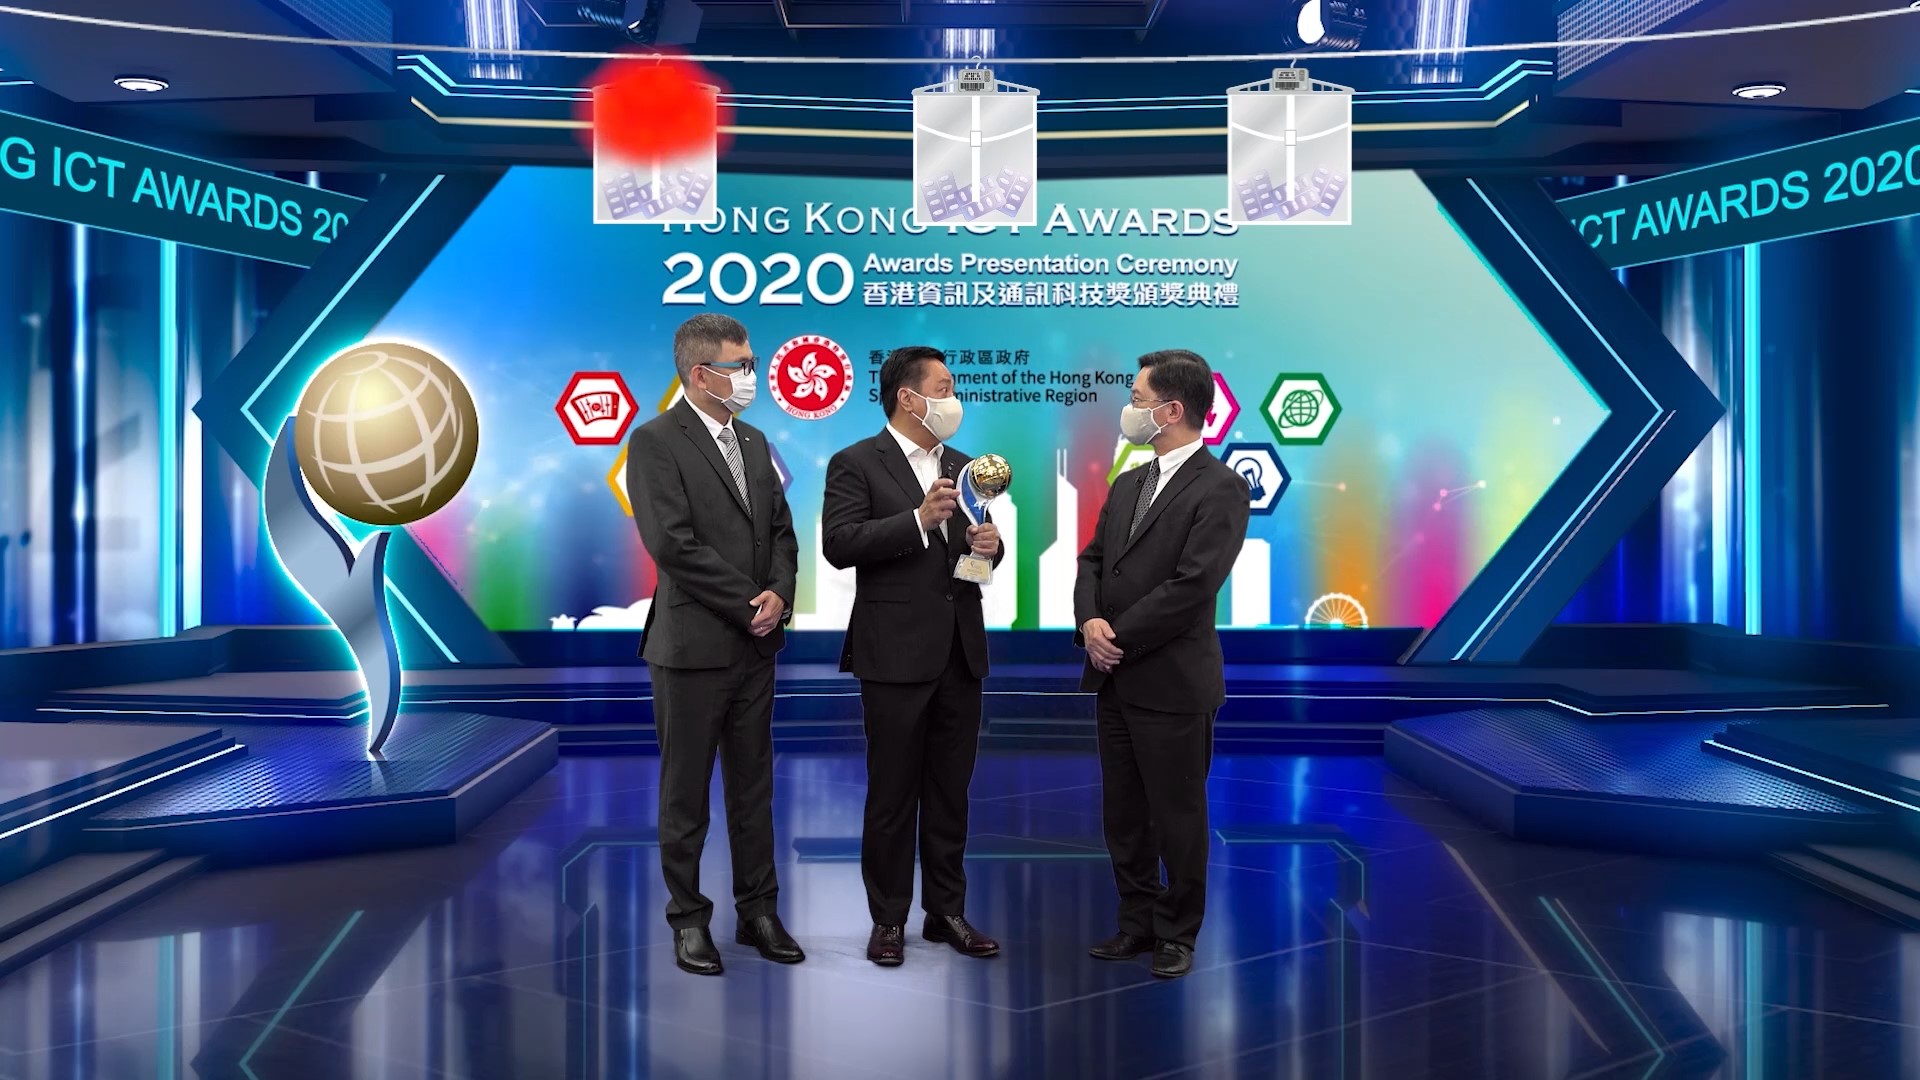 Hong Kong ICT Awards 2020 Awards Presentation Ceremony